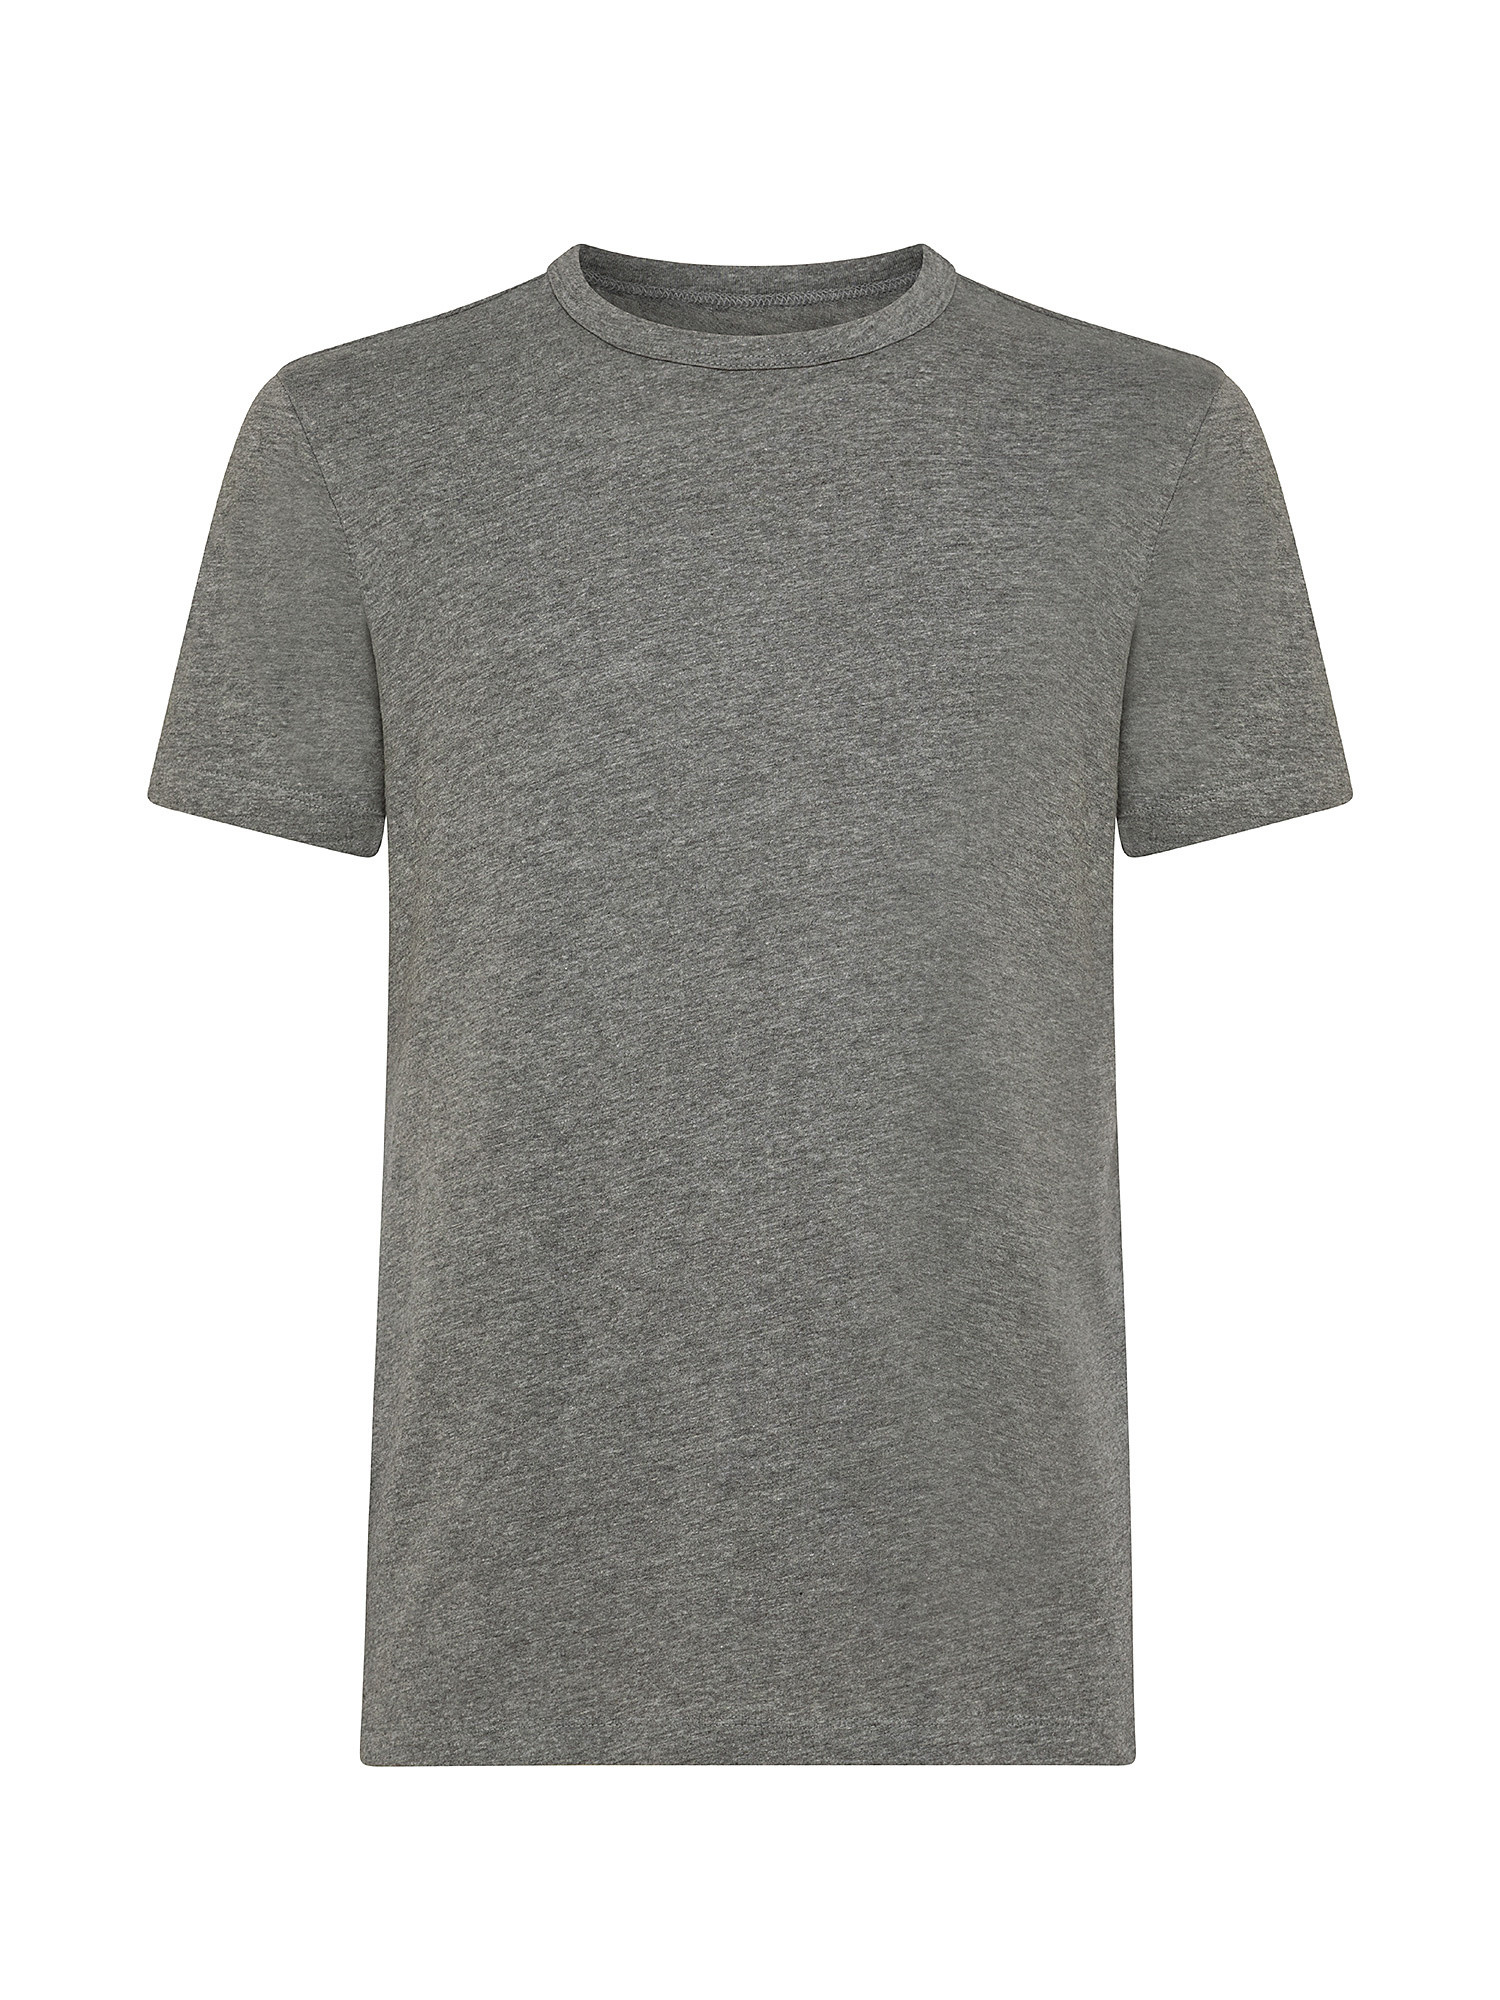 Luca D'Altieri - Set of 2 t-shirts, Grey, large image number 0